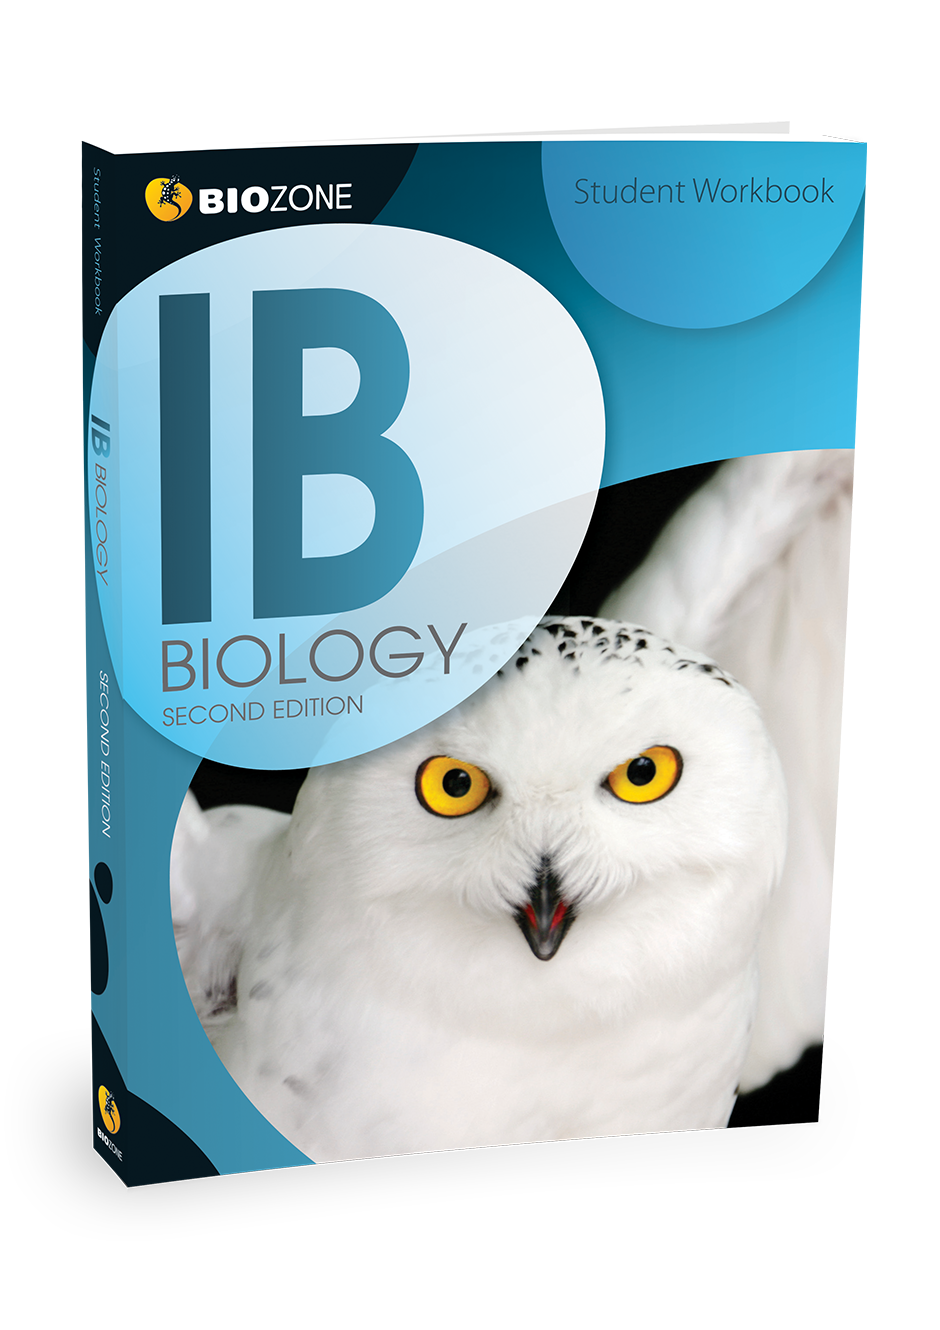 Ib Biology 2nd edition Student edition